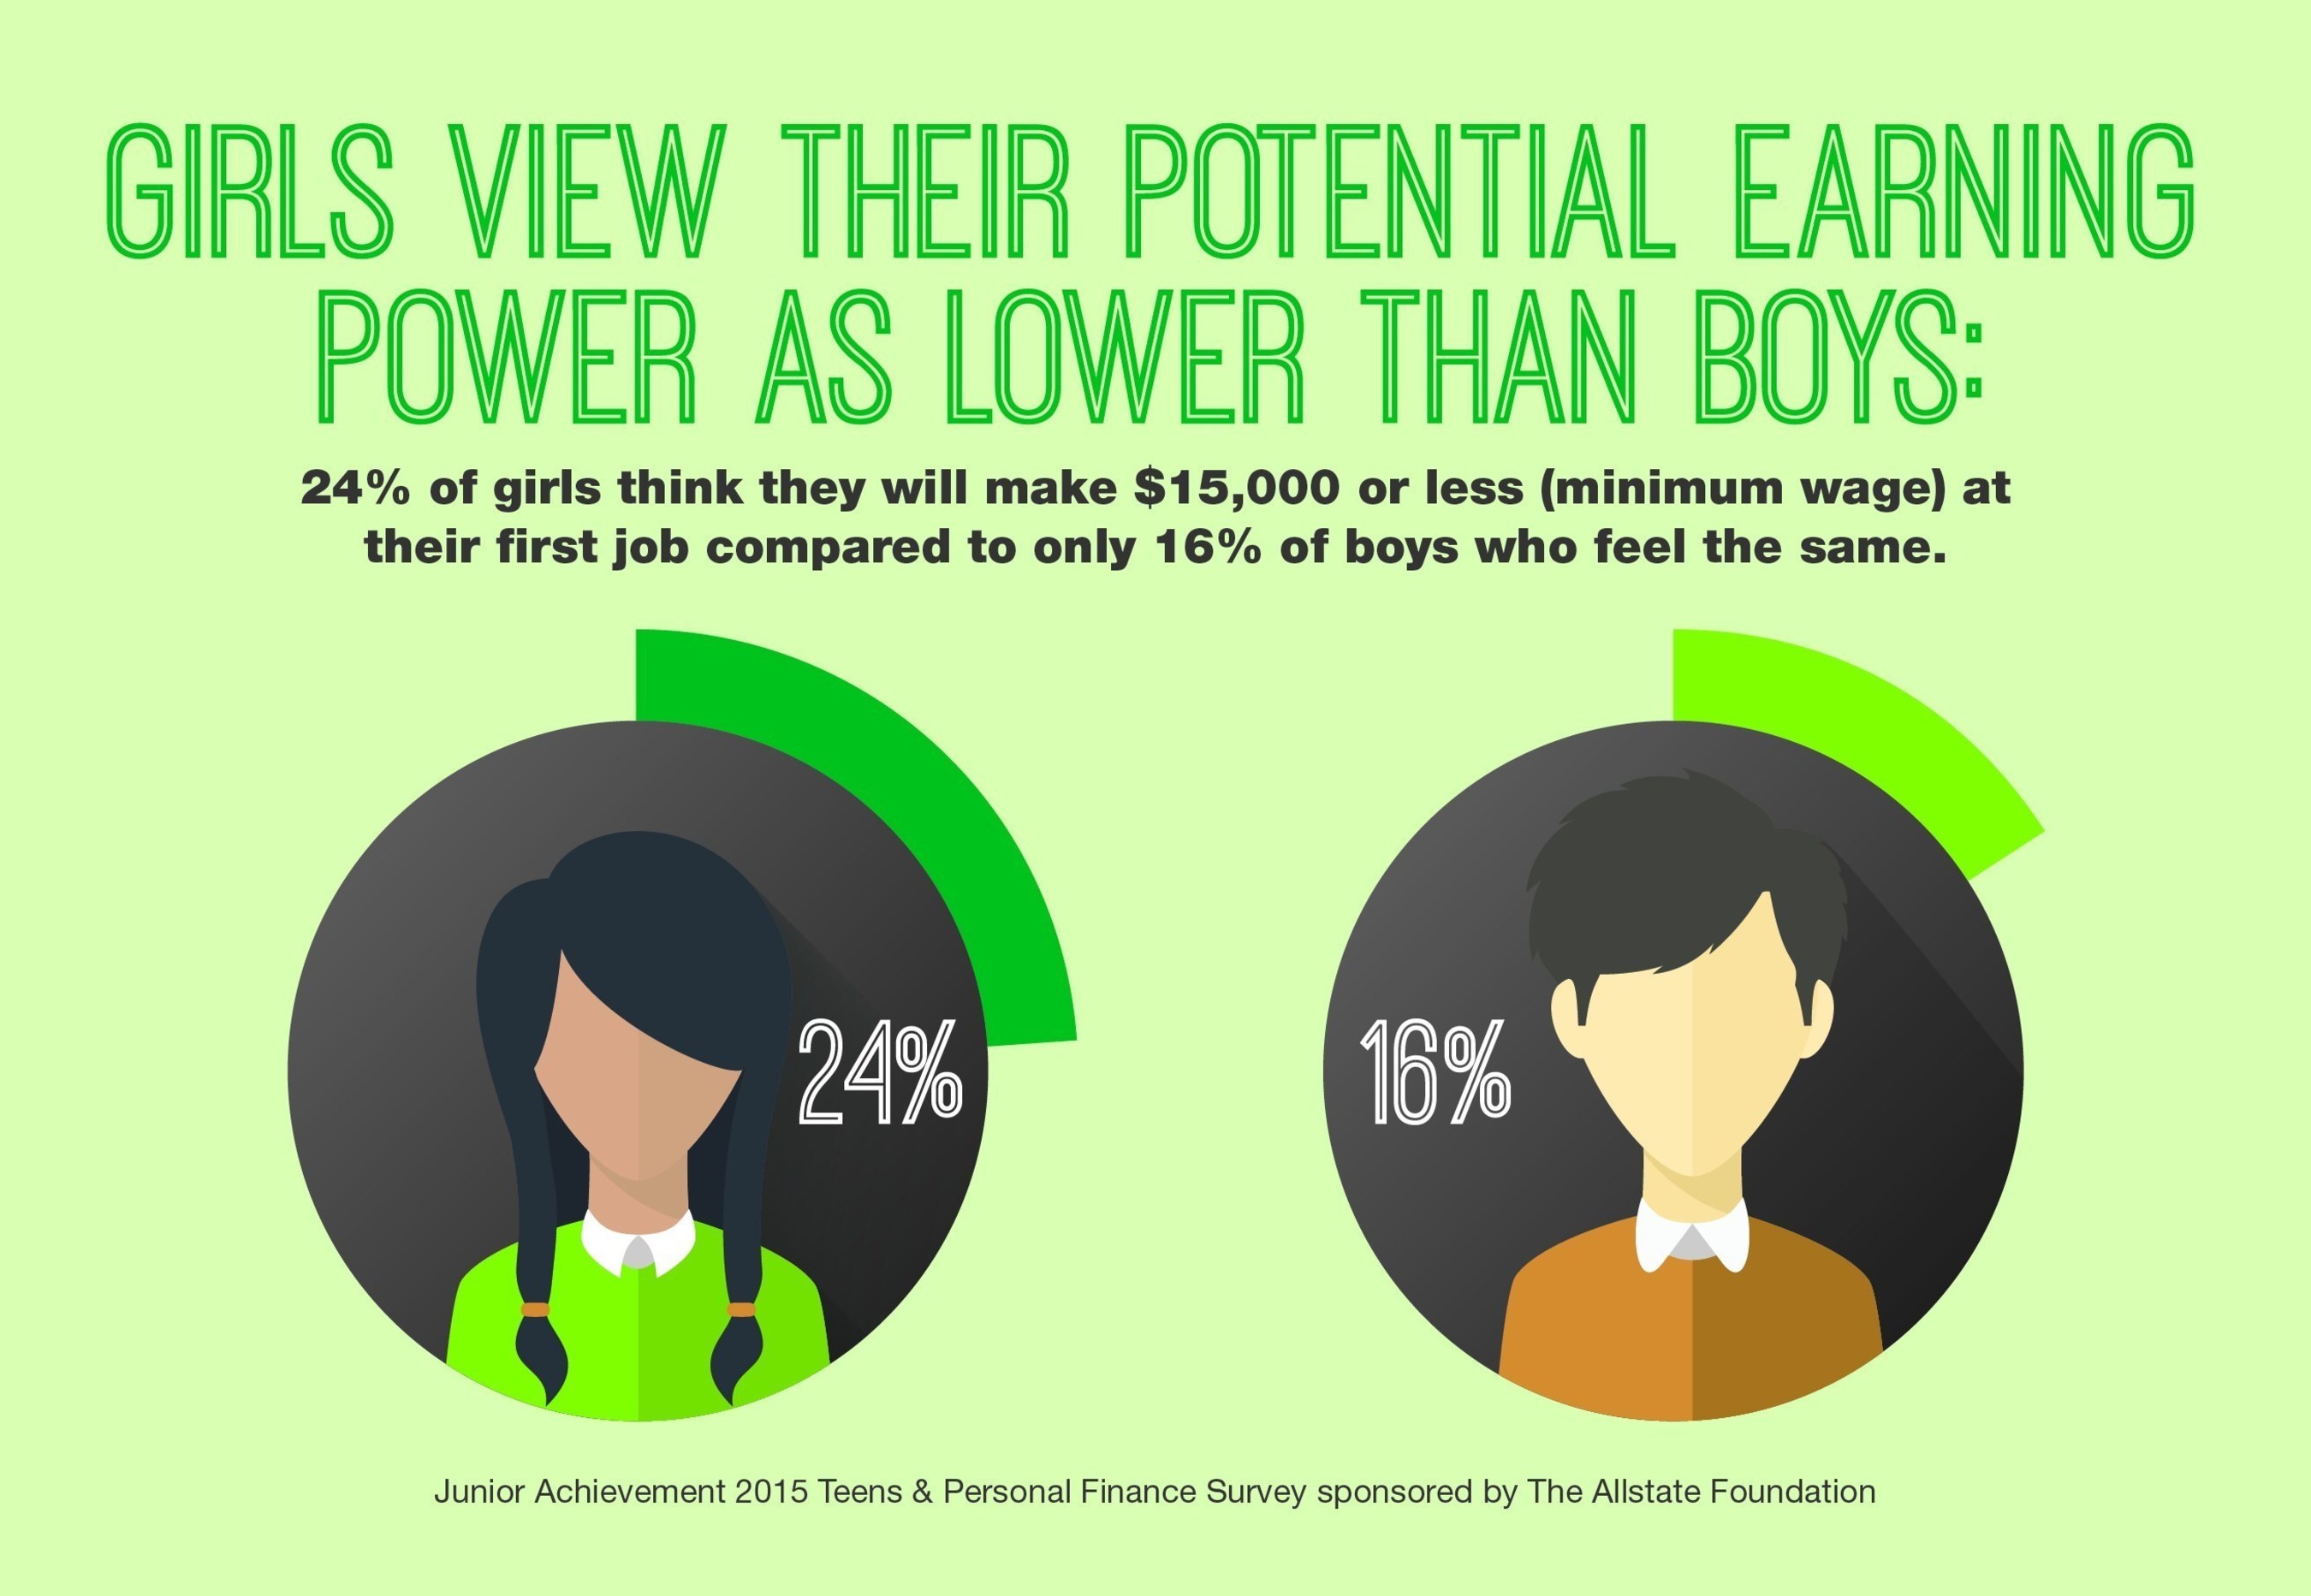 New Survey from Junior Achievement & The Allstate Foundation Reveals Gender Gap in Personal Finance